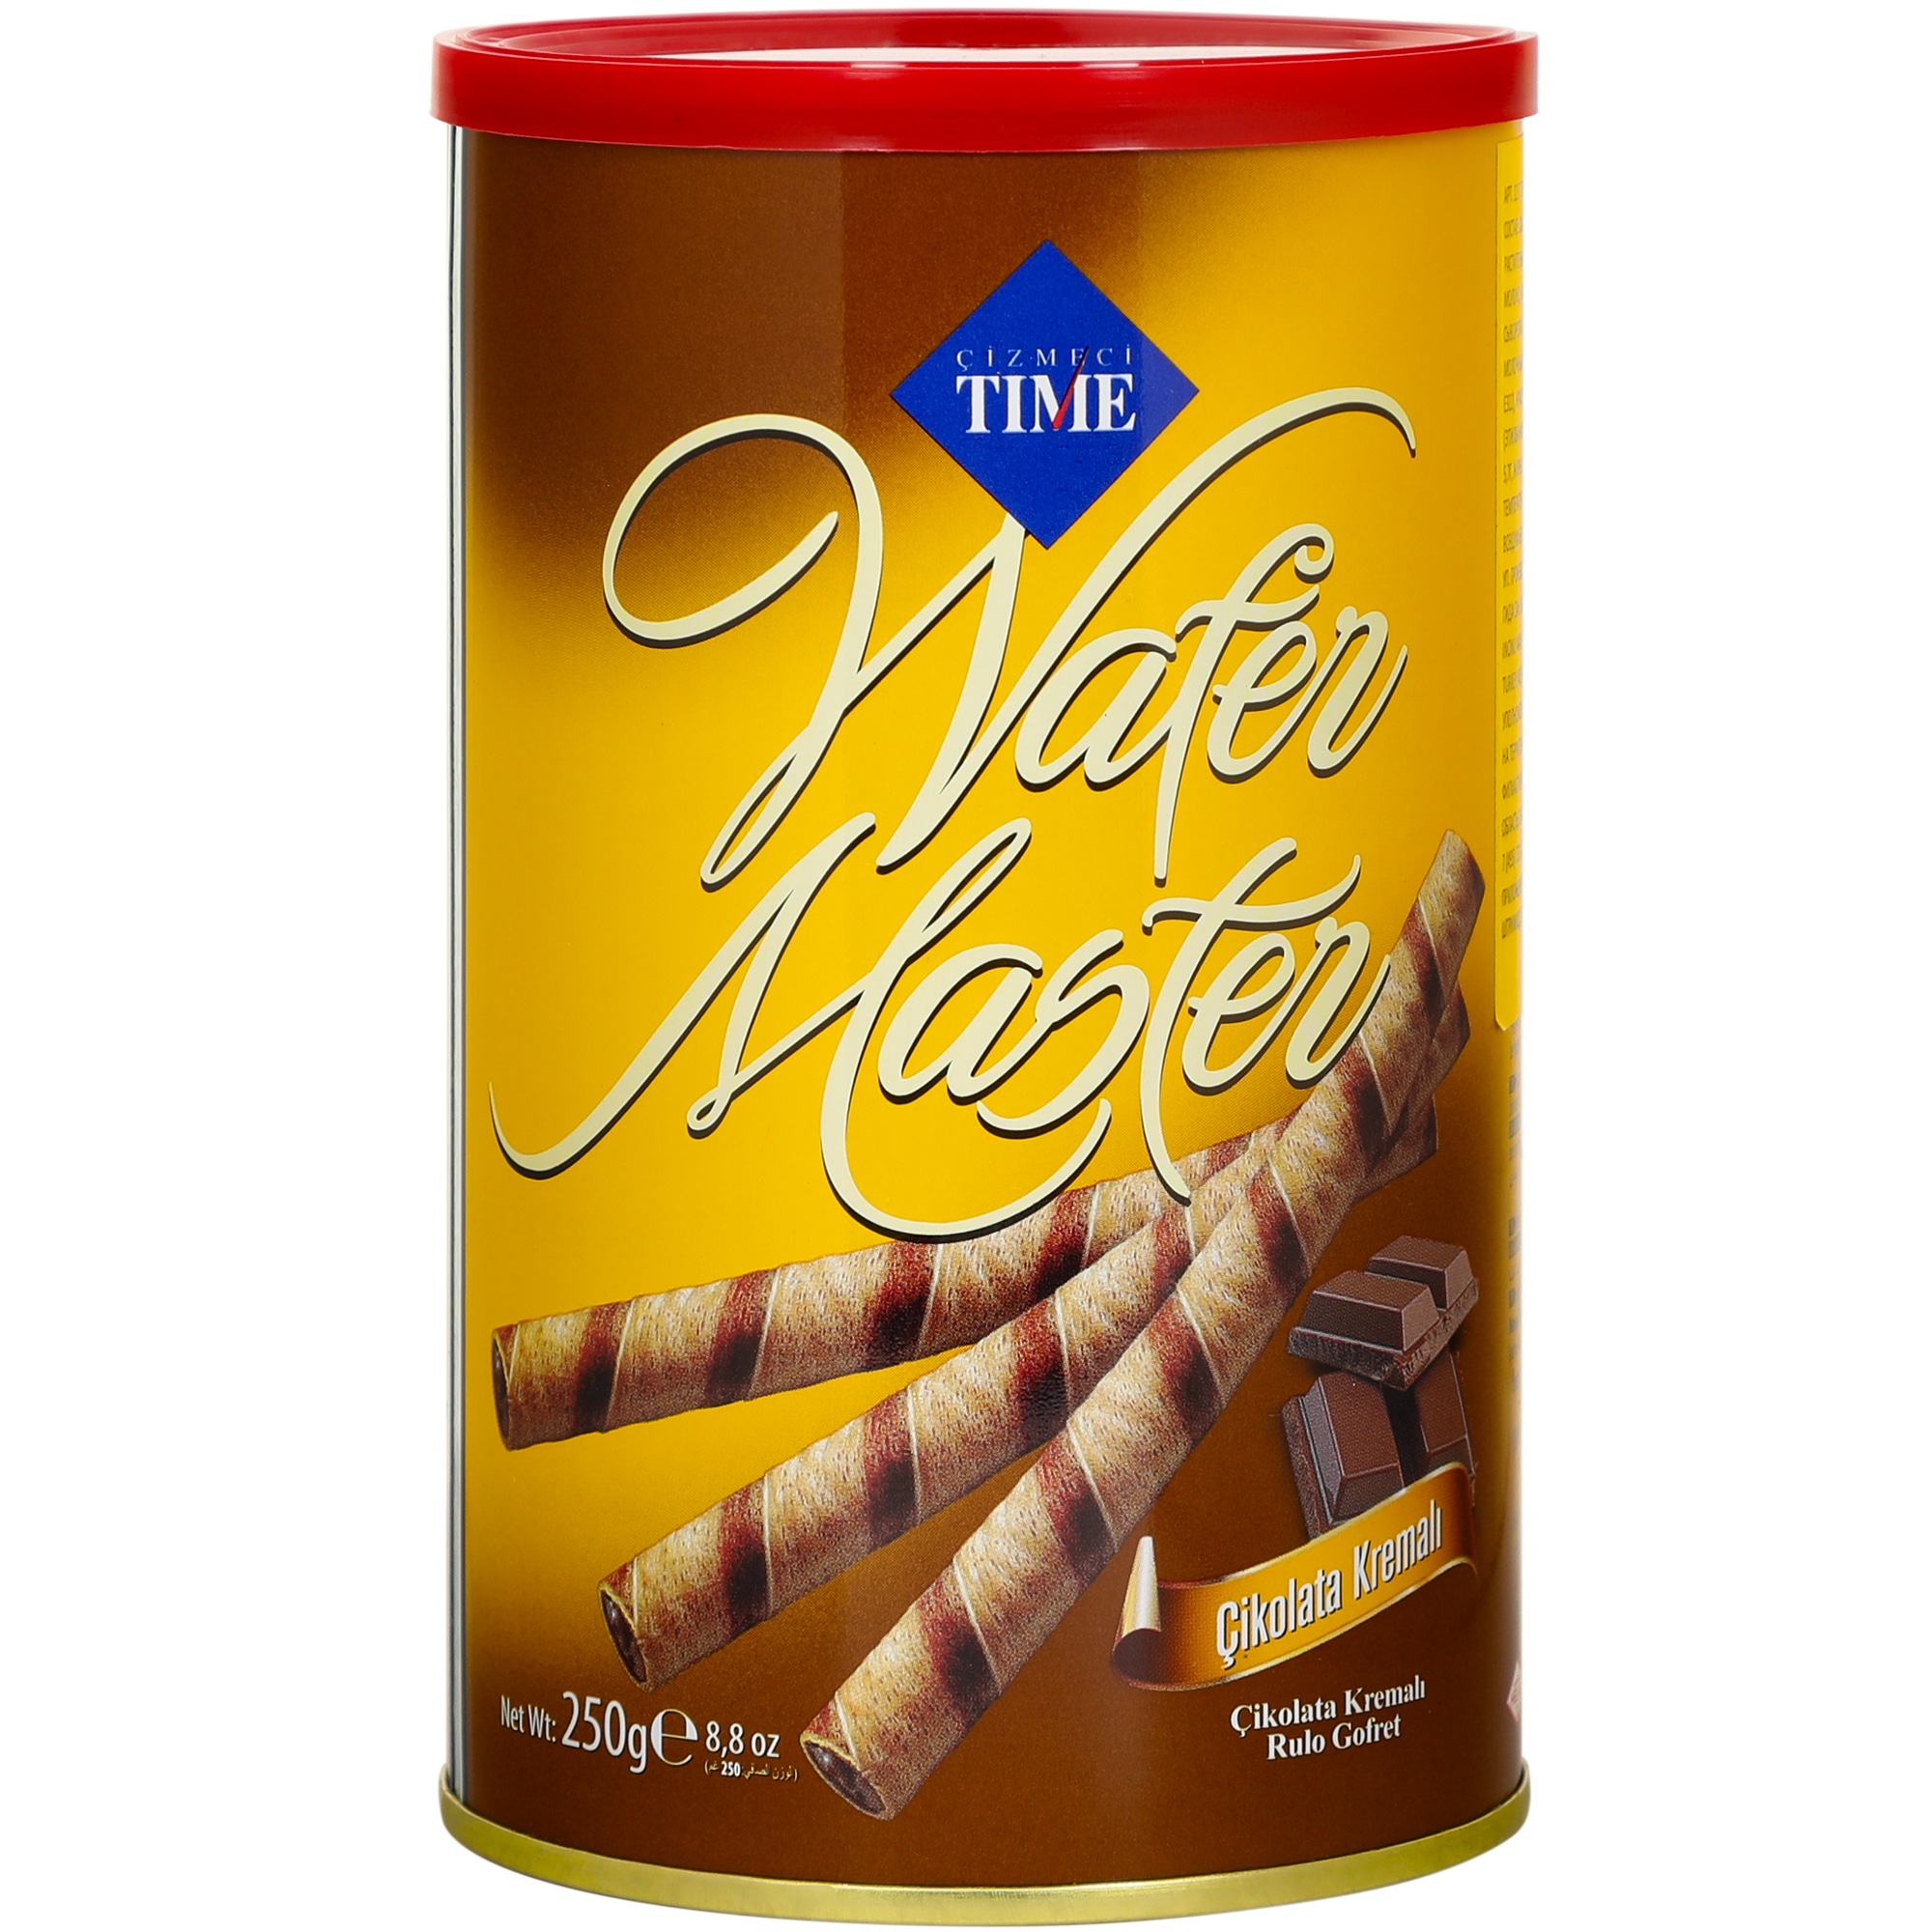 трубочки cizmeci time вафельные wafer master шоколад 400 г Трубочки Cizmeci Time вафельные wafer master шоколад, 250 г